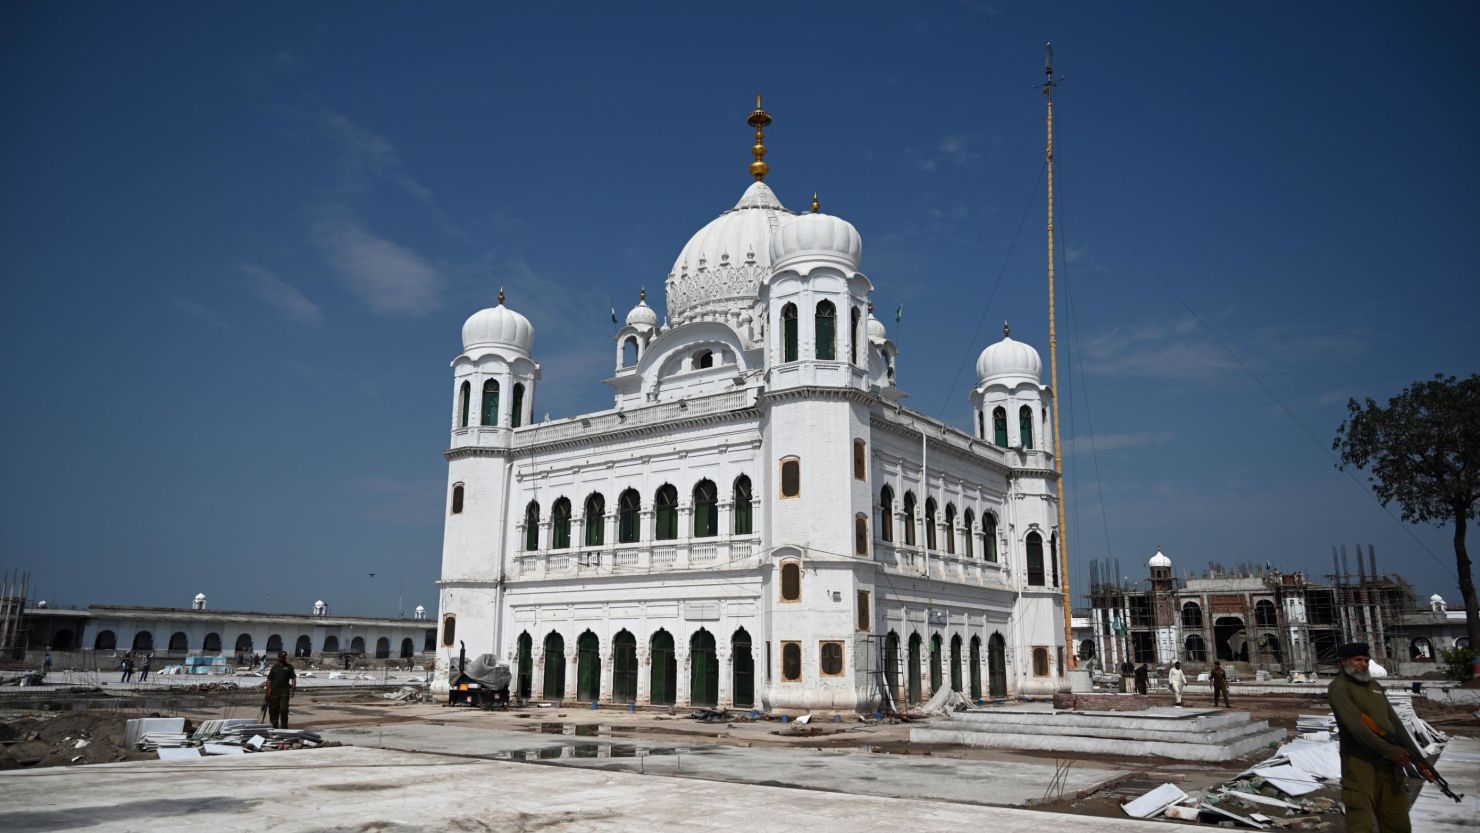 The Sikh religious site Gurdwara Darbar Sahib, in the Pakistani town of Kartarpur near the Indian border.